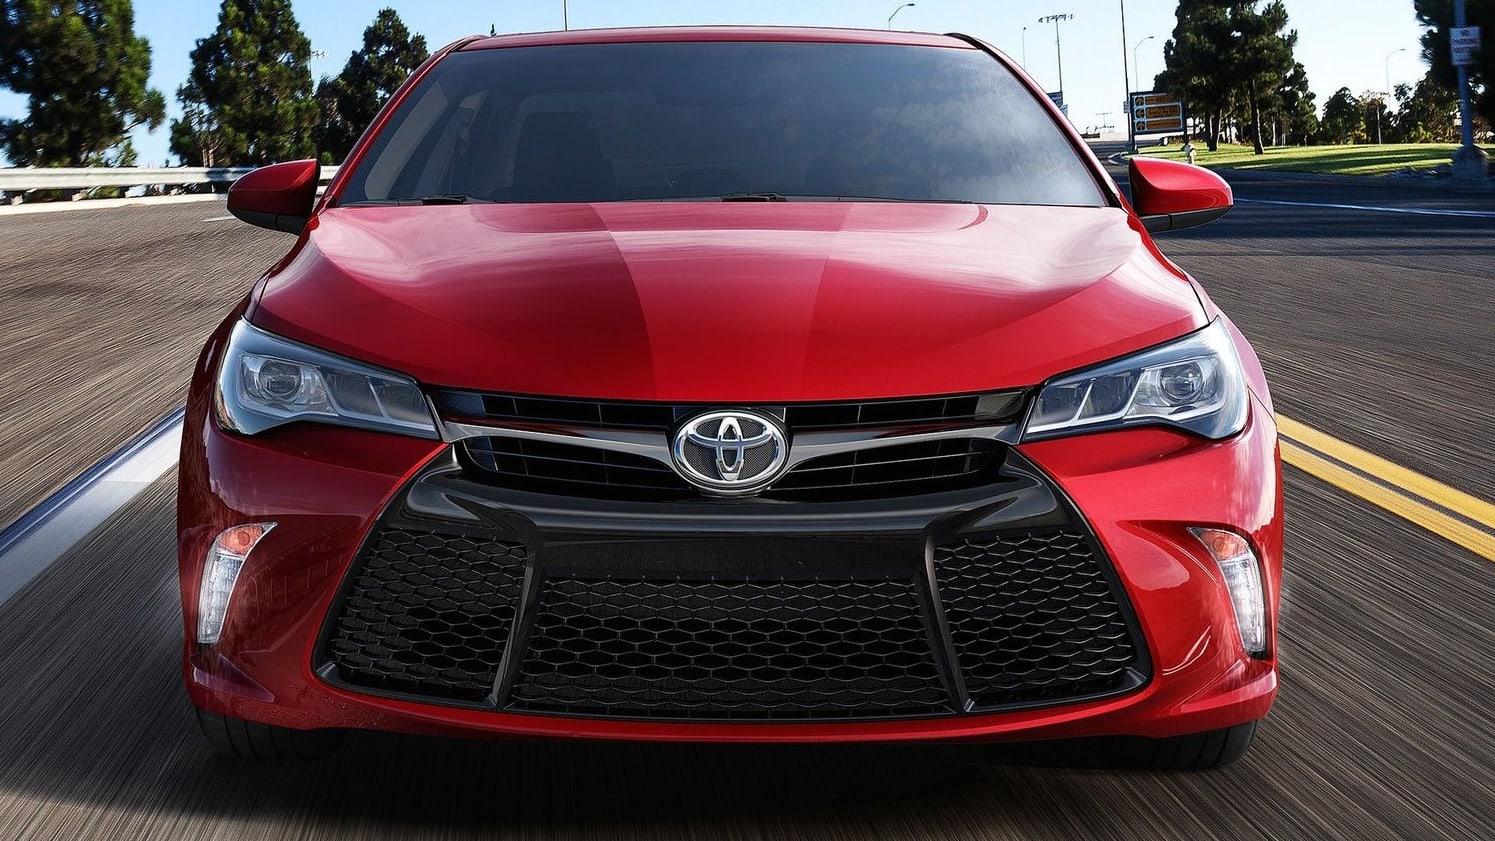 2015 Toyota New Cars | CarAdvice